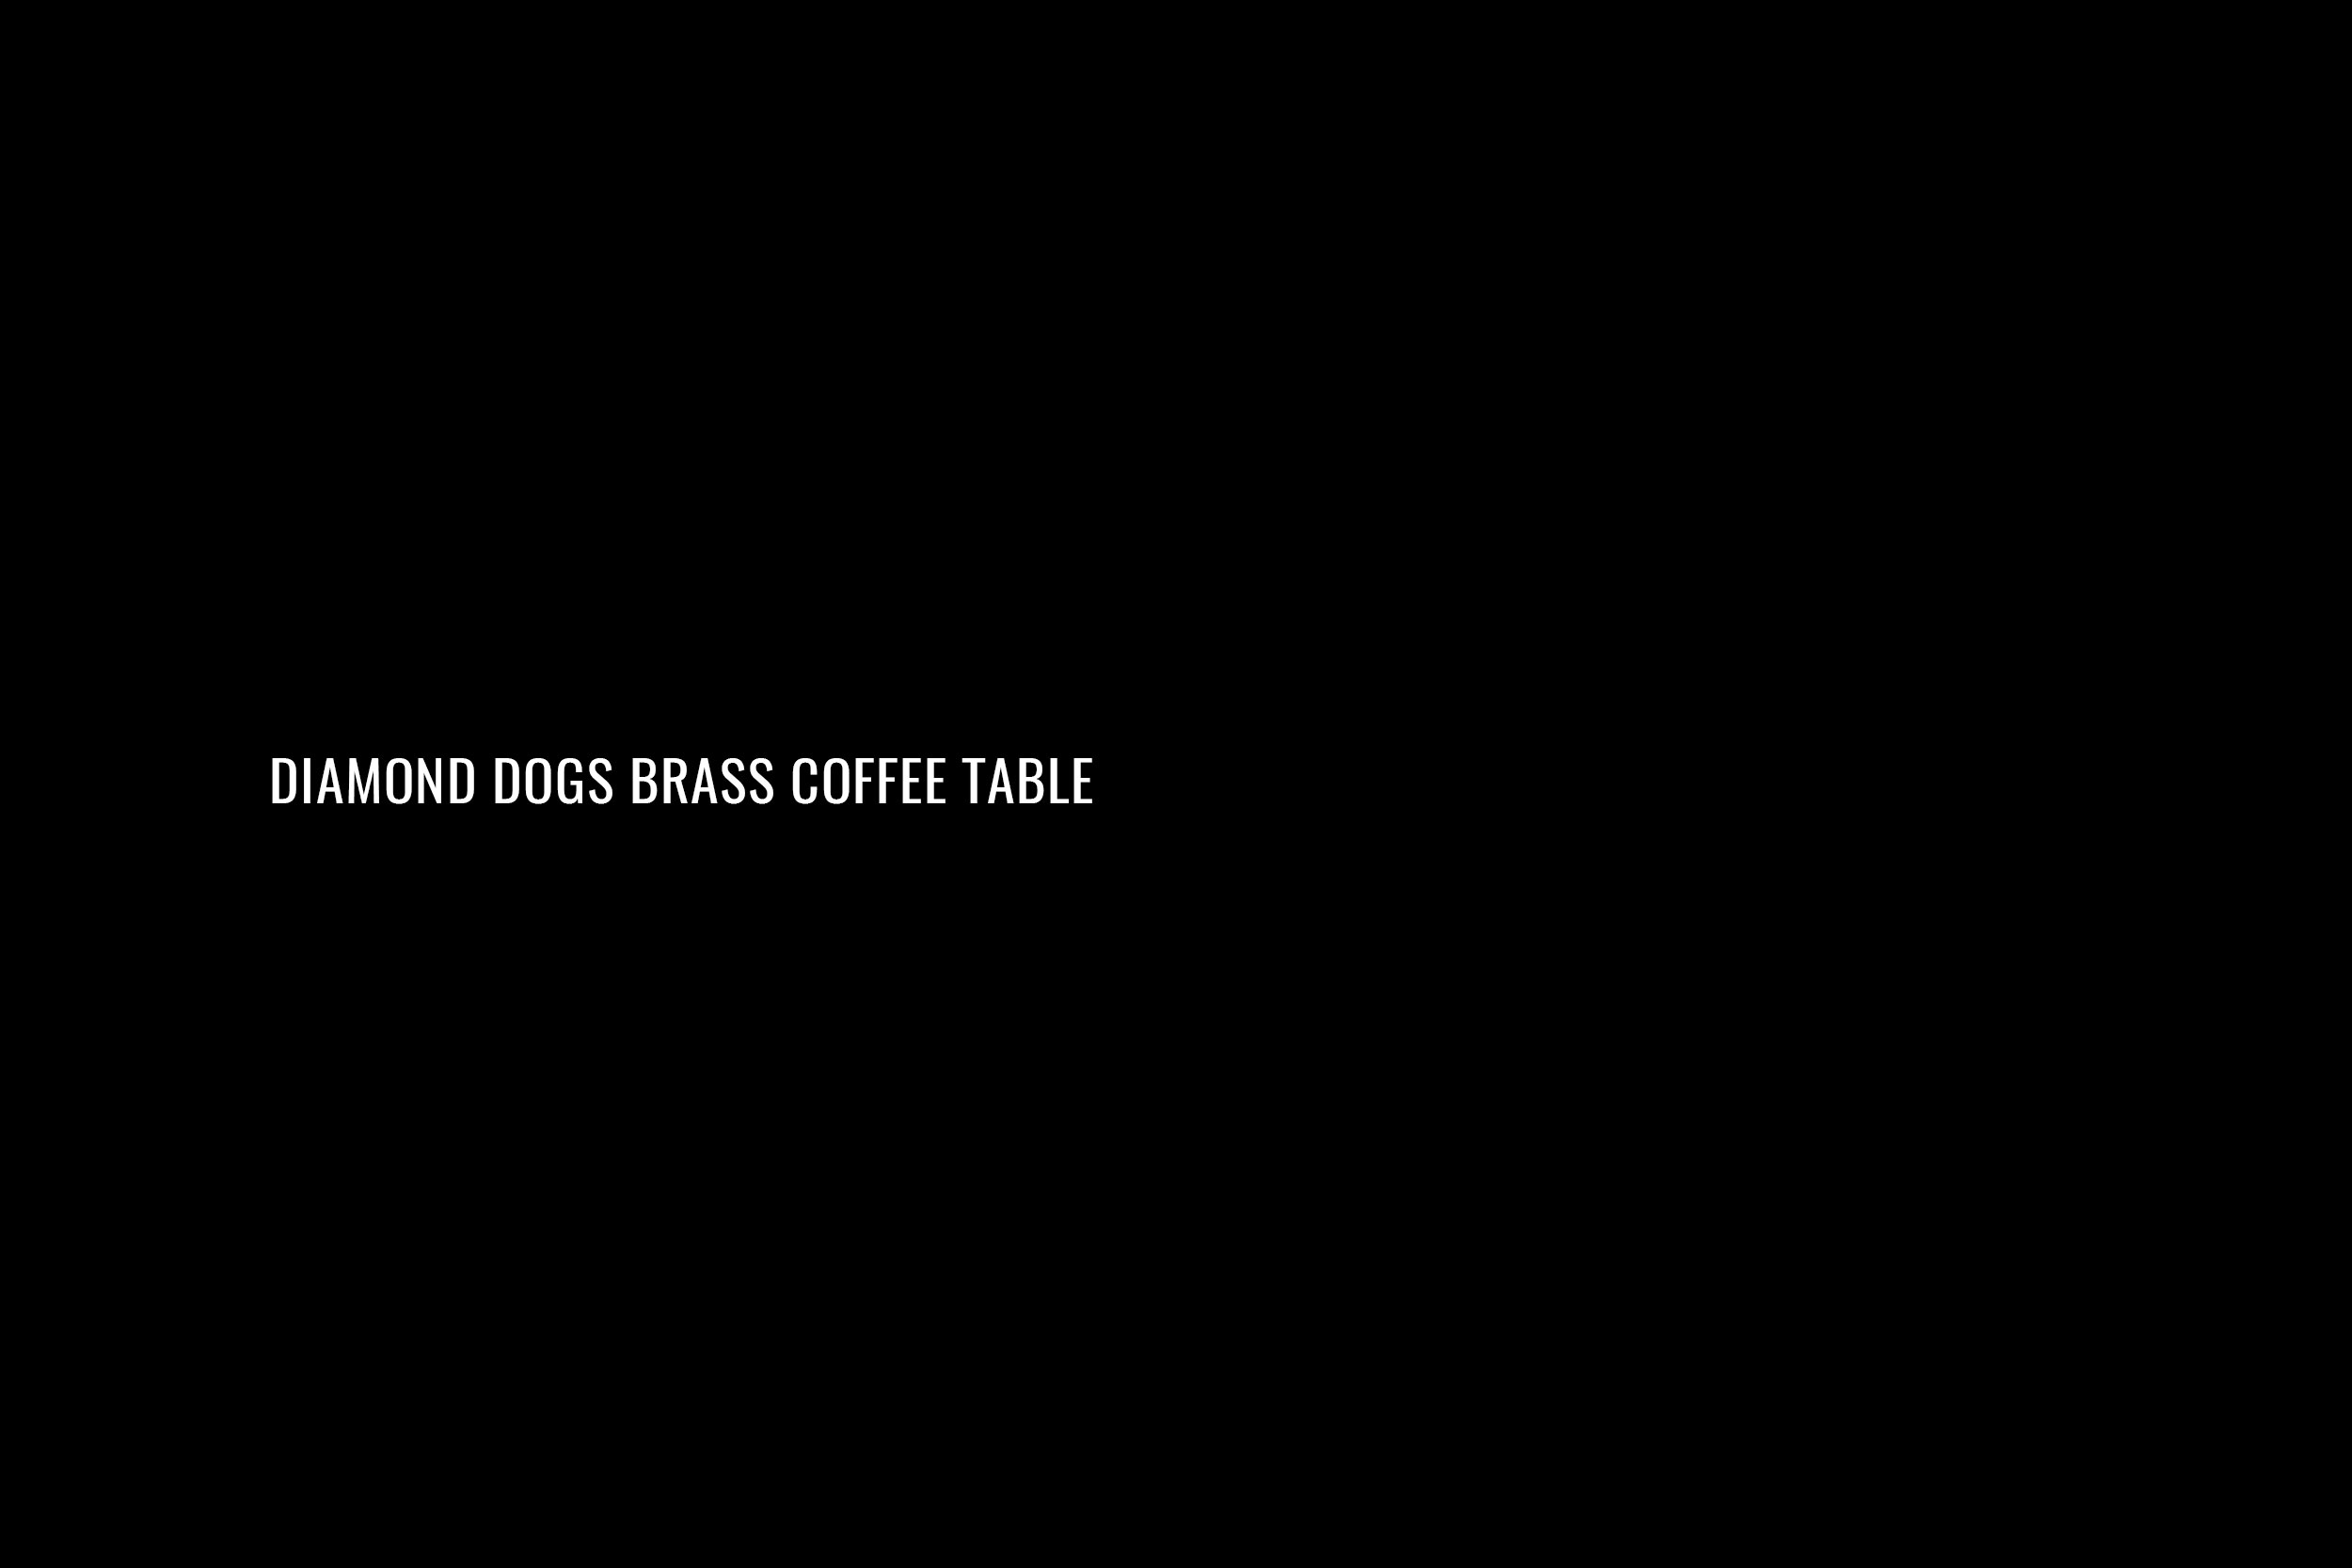 Bowie-Slideshow-DIAMOND-DOGS-BRASS-COFFEETABLE.jpg